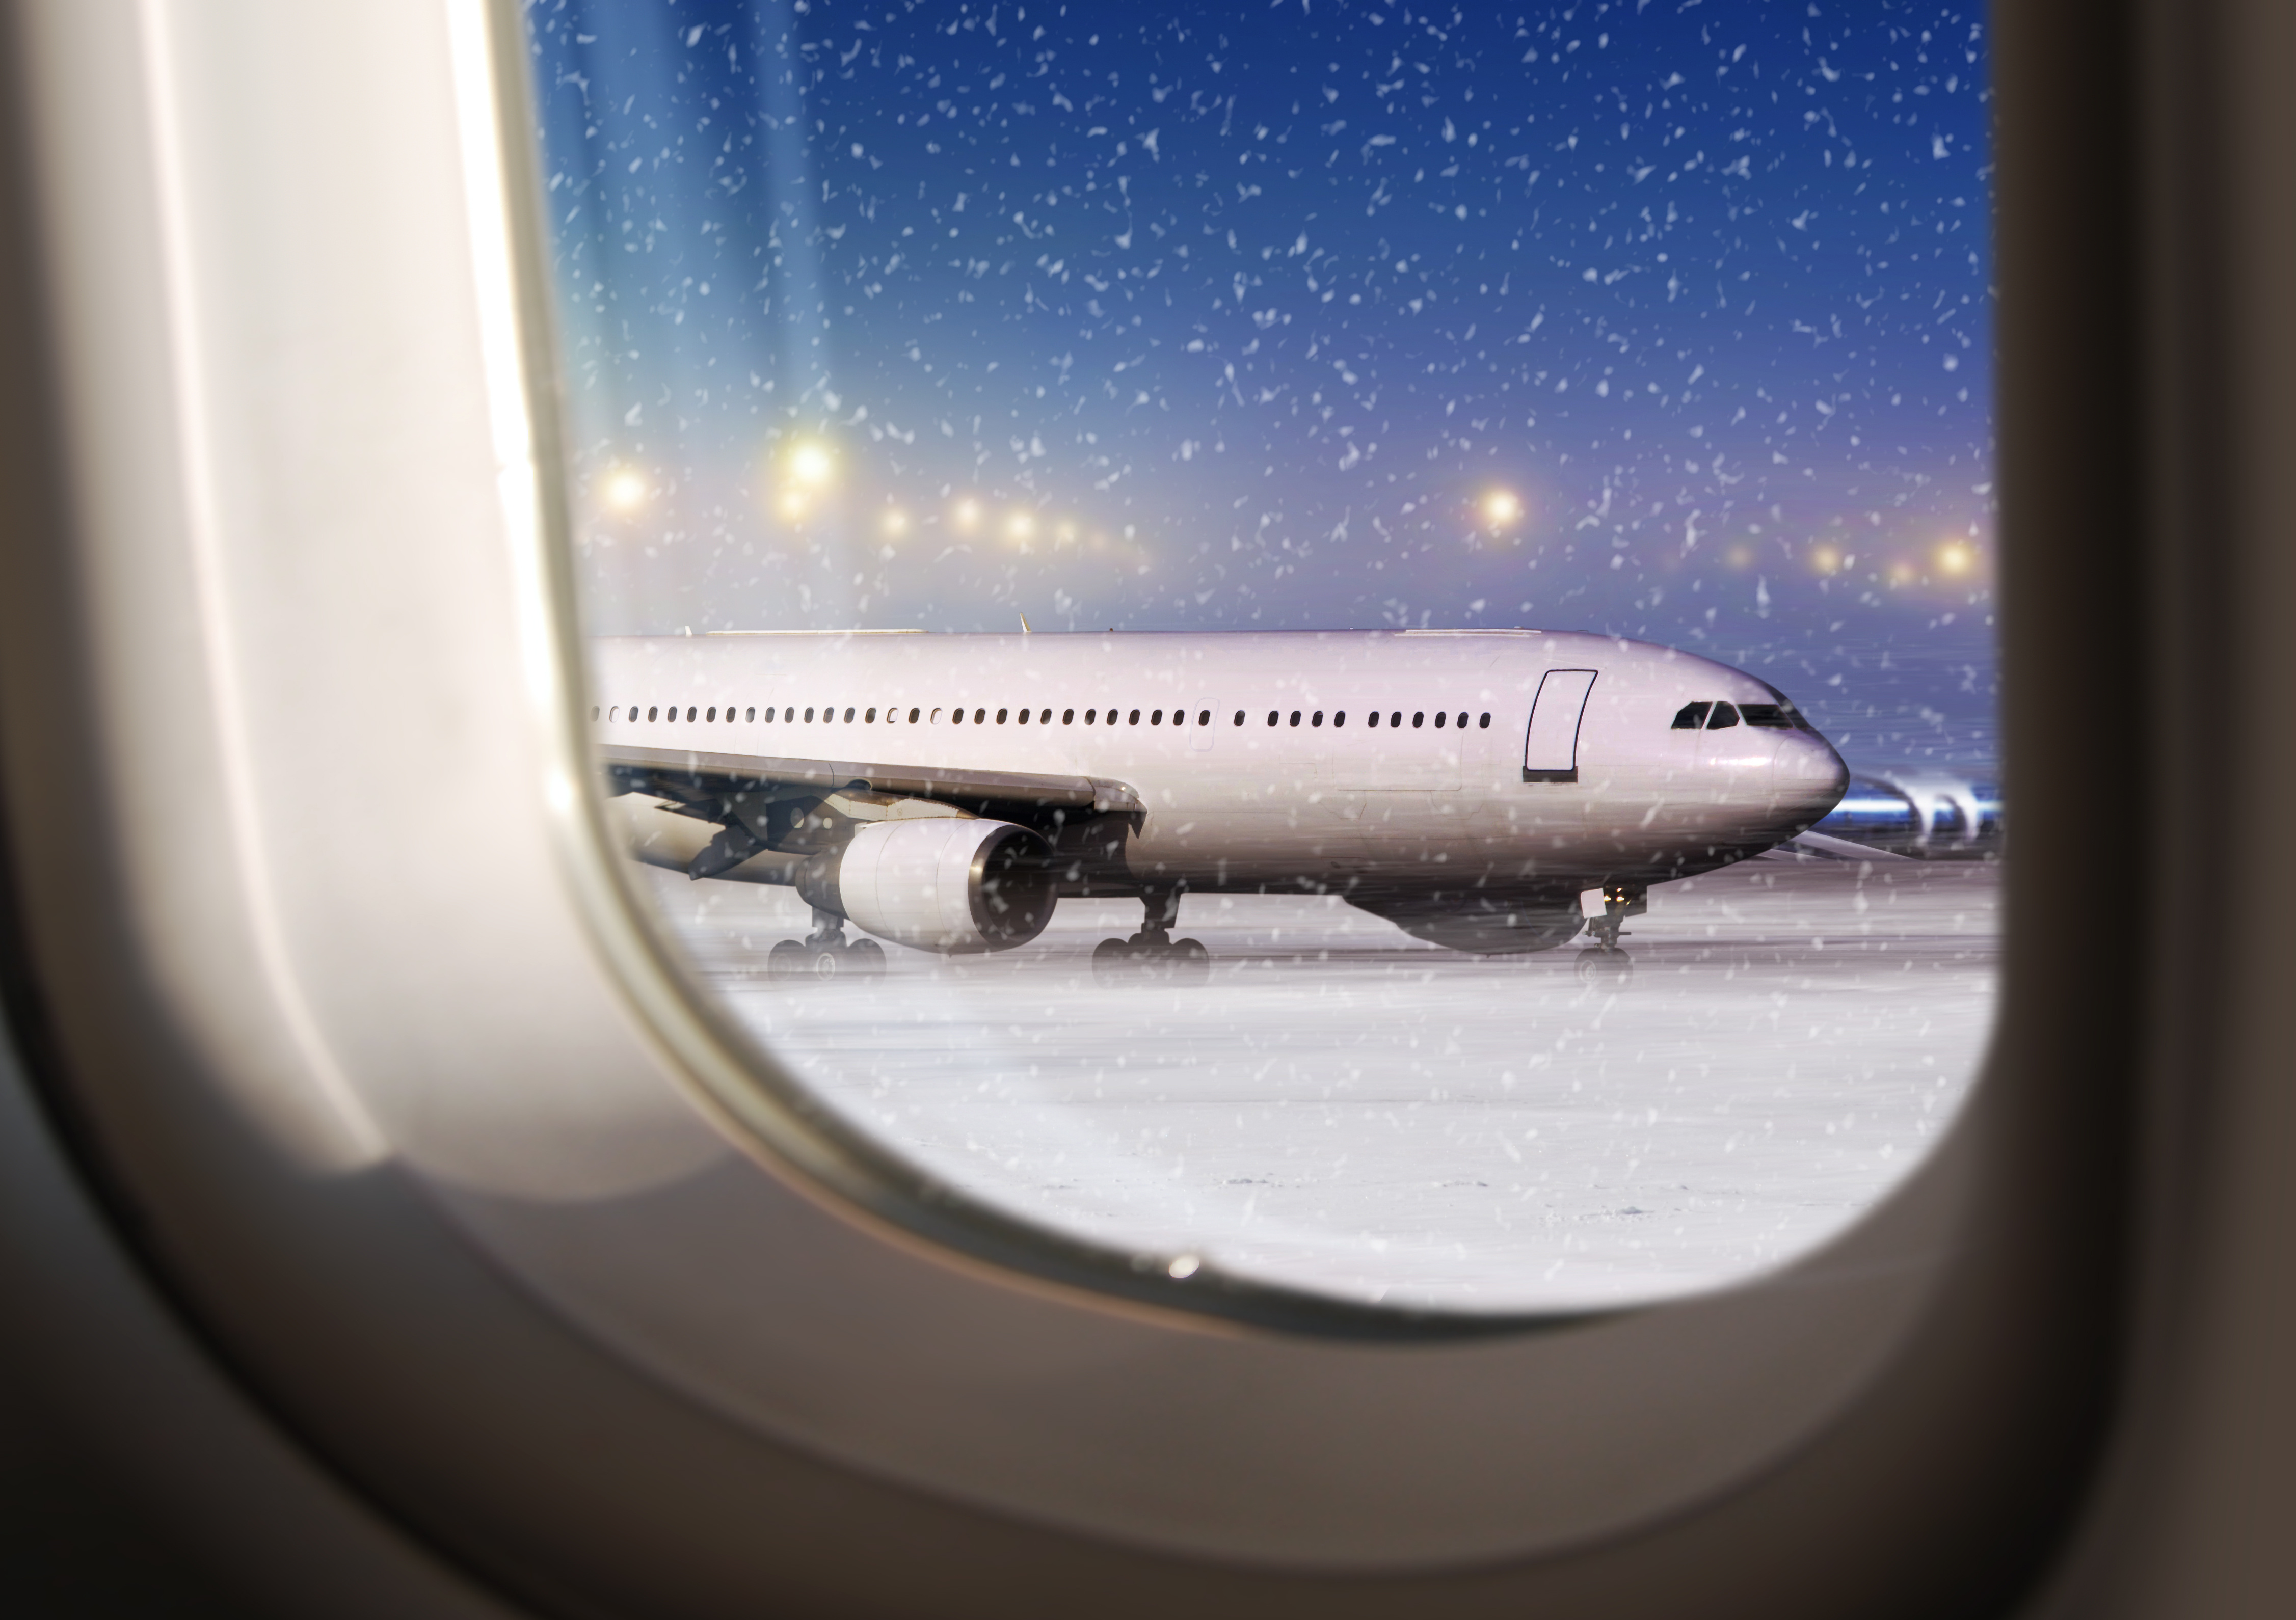 View of snowfall through plane window